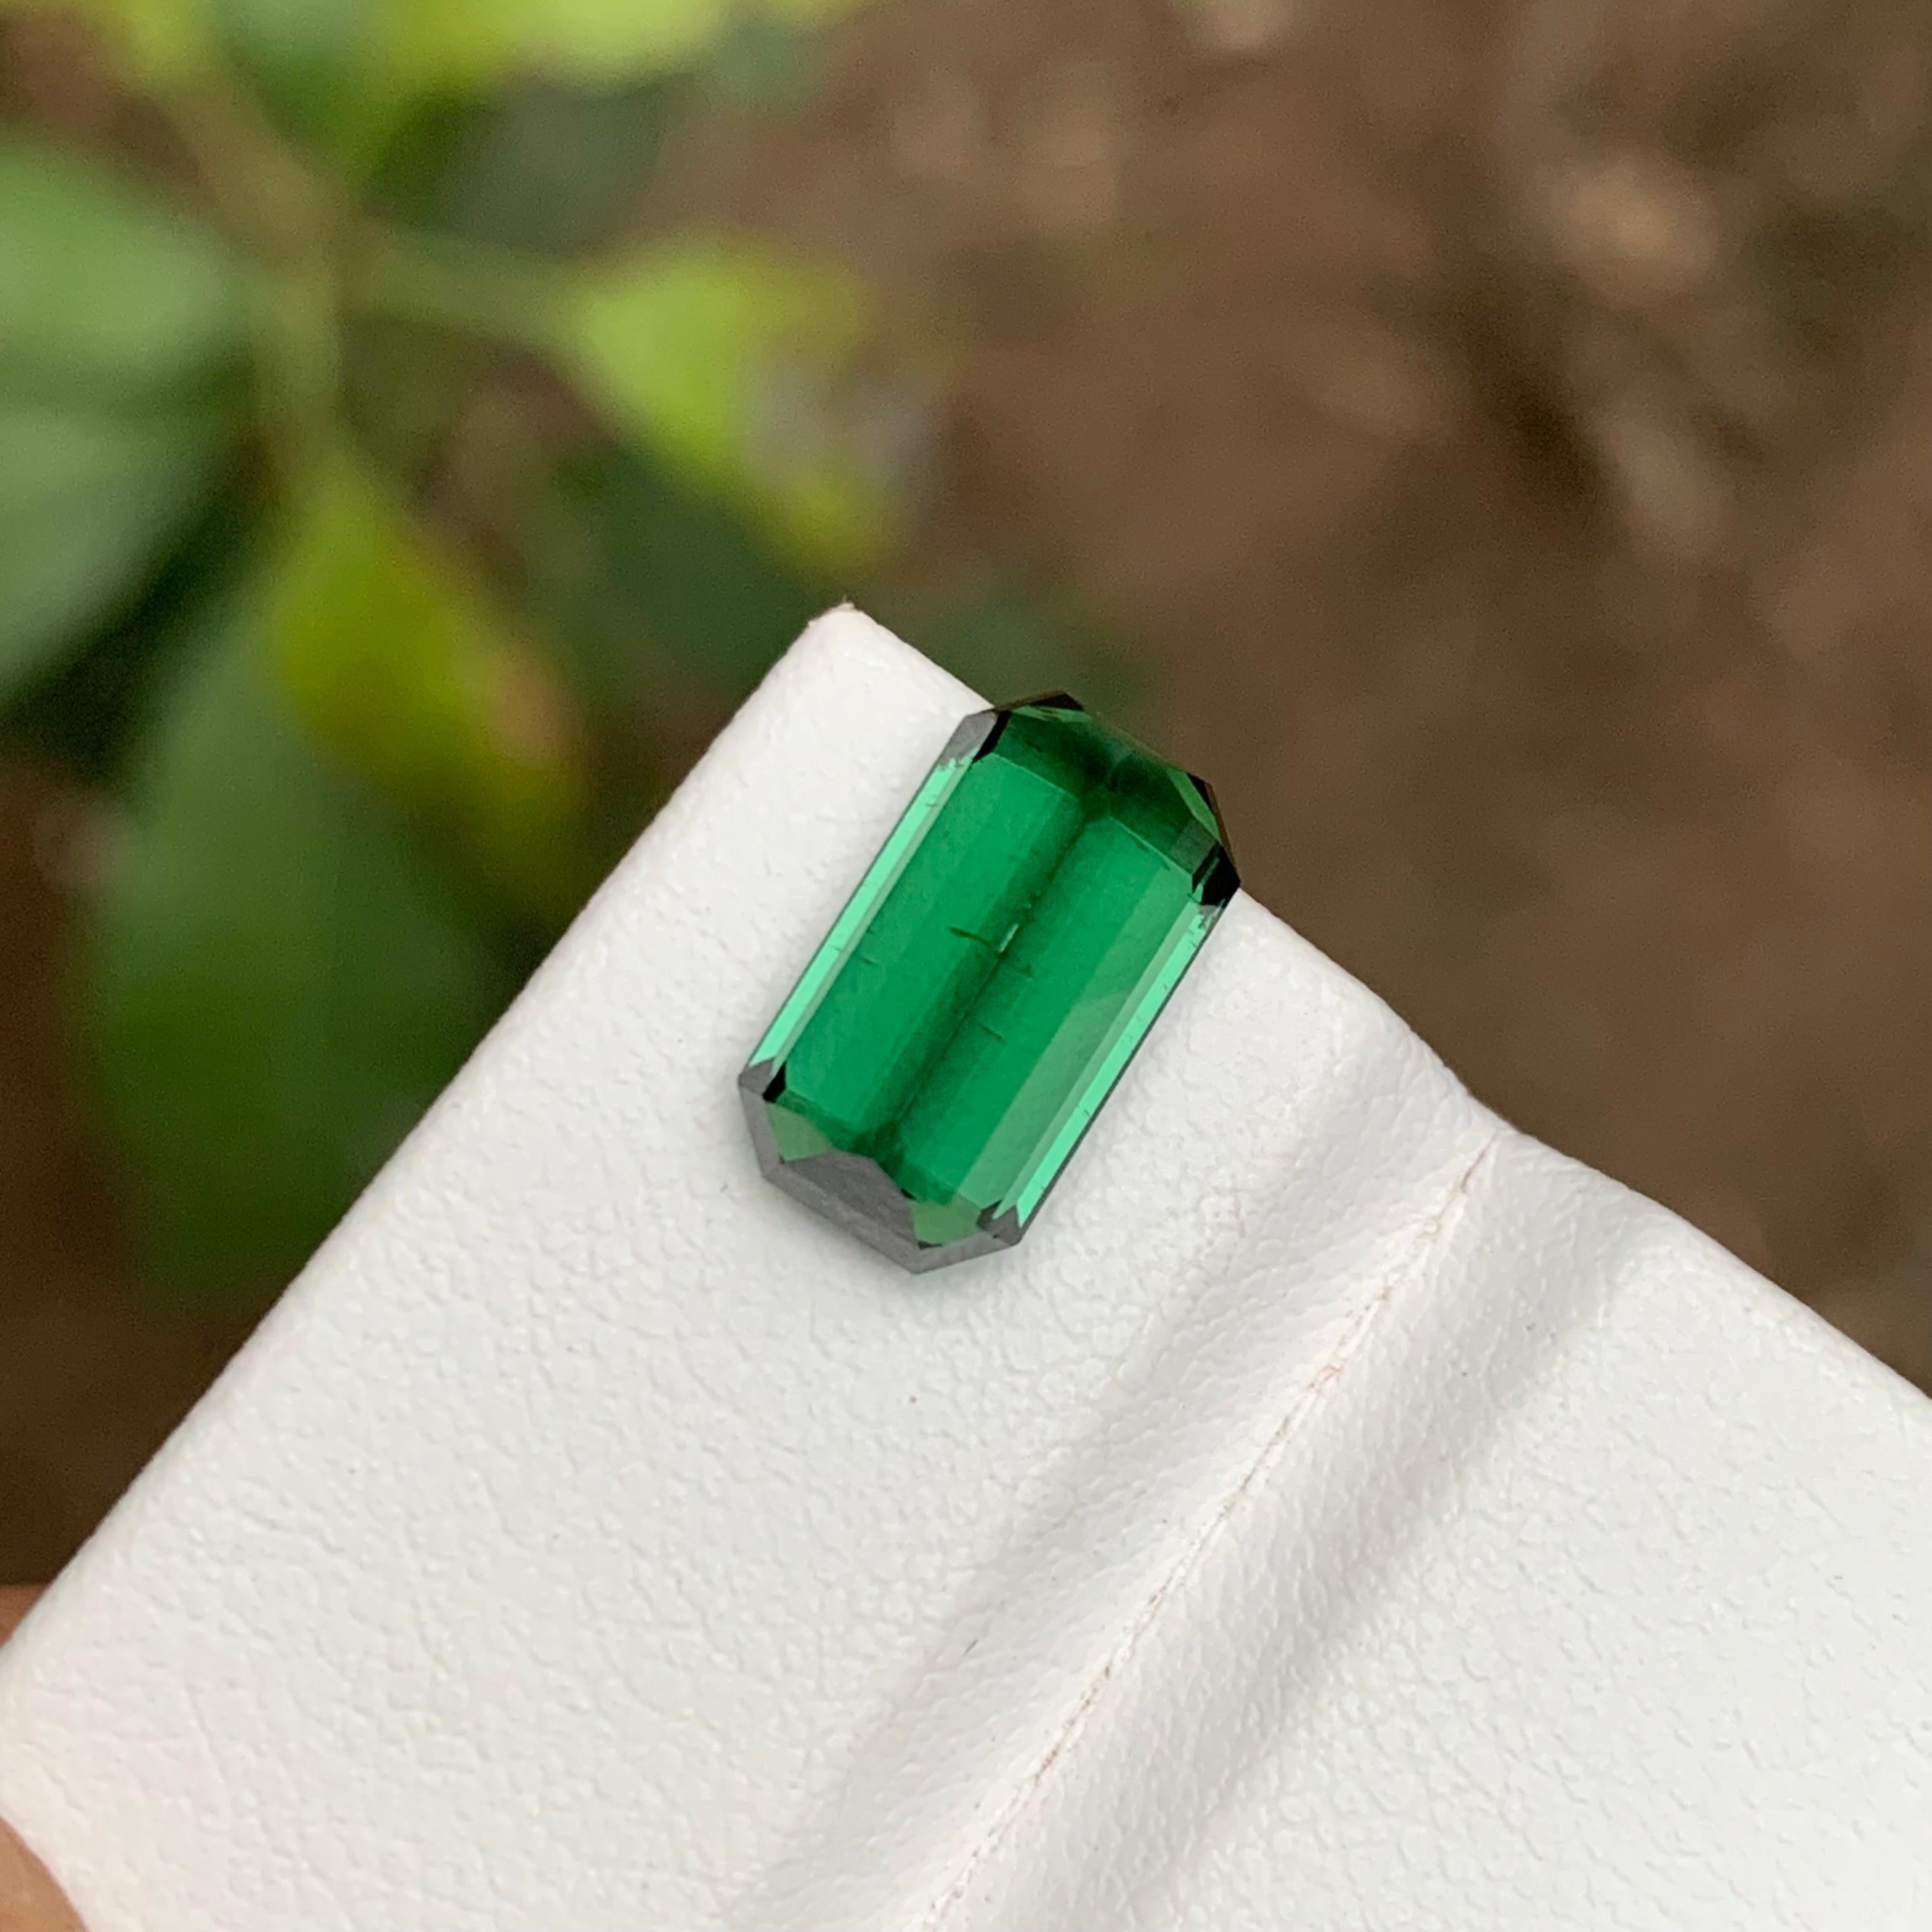 Contemporary Rare Green Natural Tourmaline Gemstone, 3.85 Carat Emerald Cut for Ring/Pendant